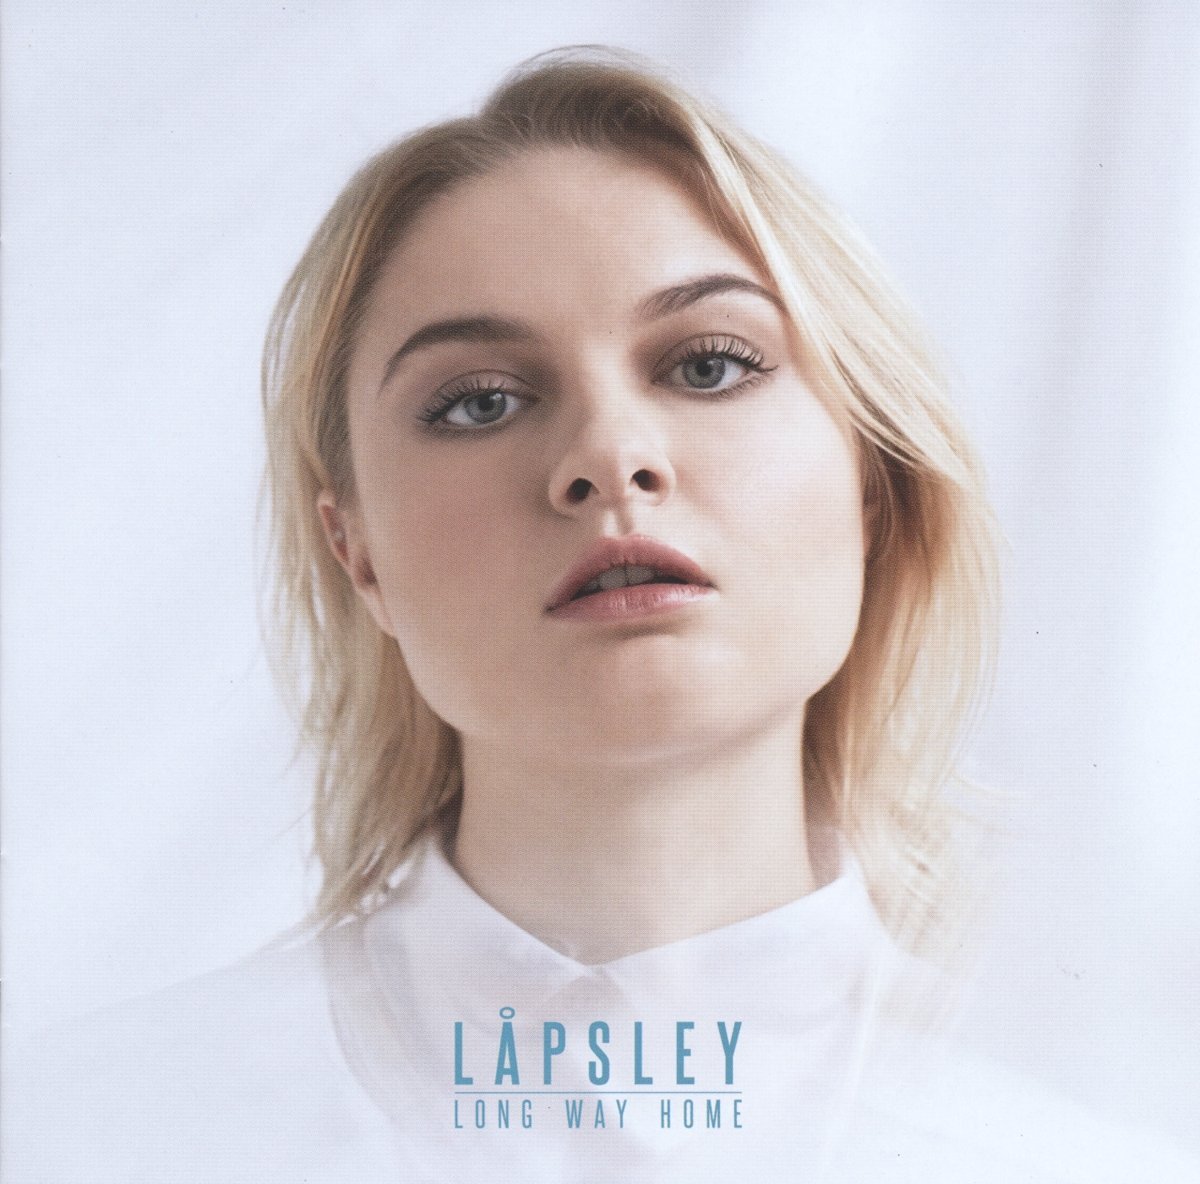 XL – Låpsley Long Way Home (March 2016)